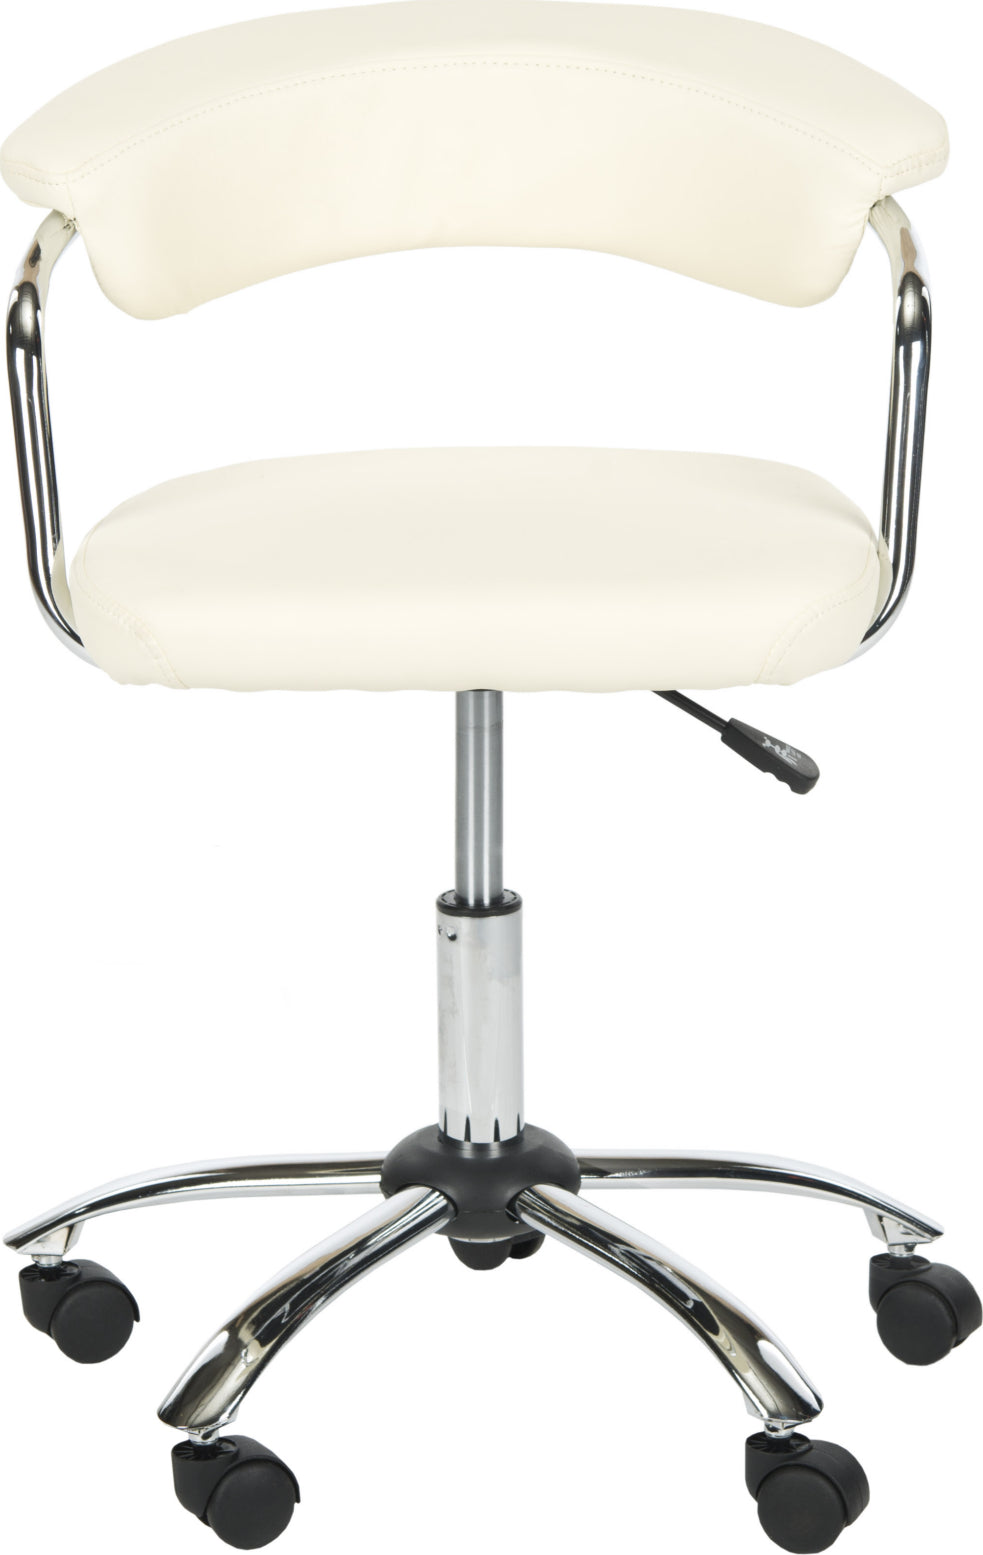 Safavieh Pier Desk Chair Cream and Silver Furniture main image